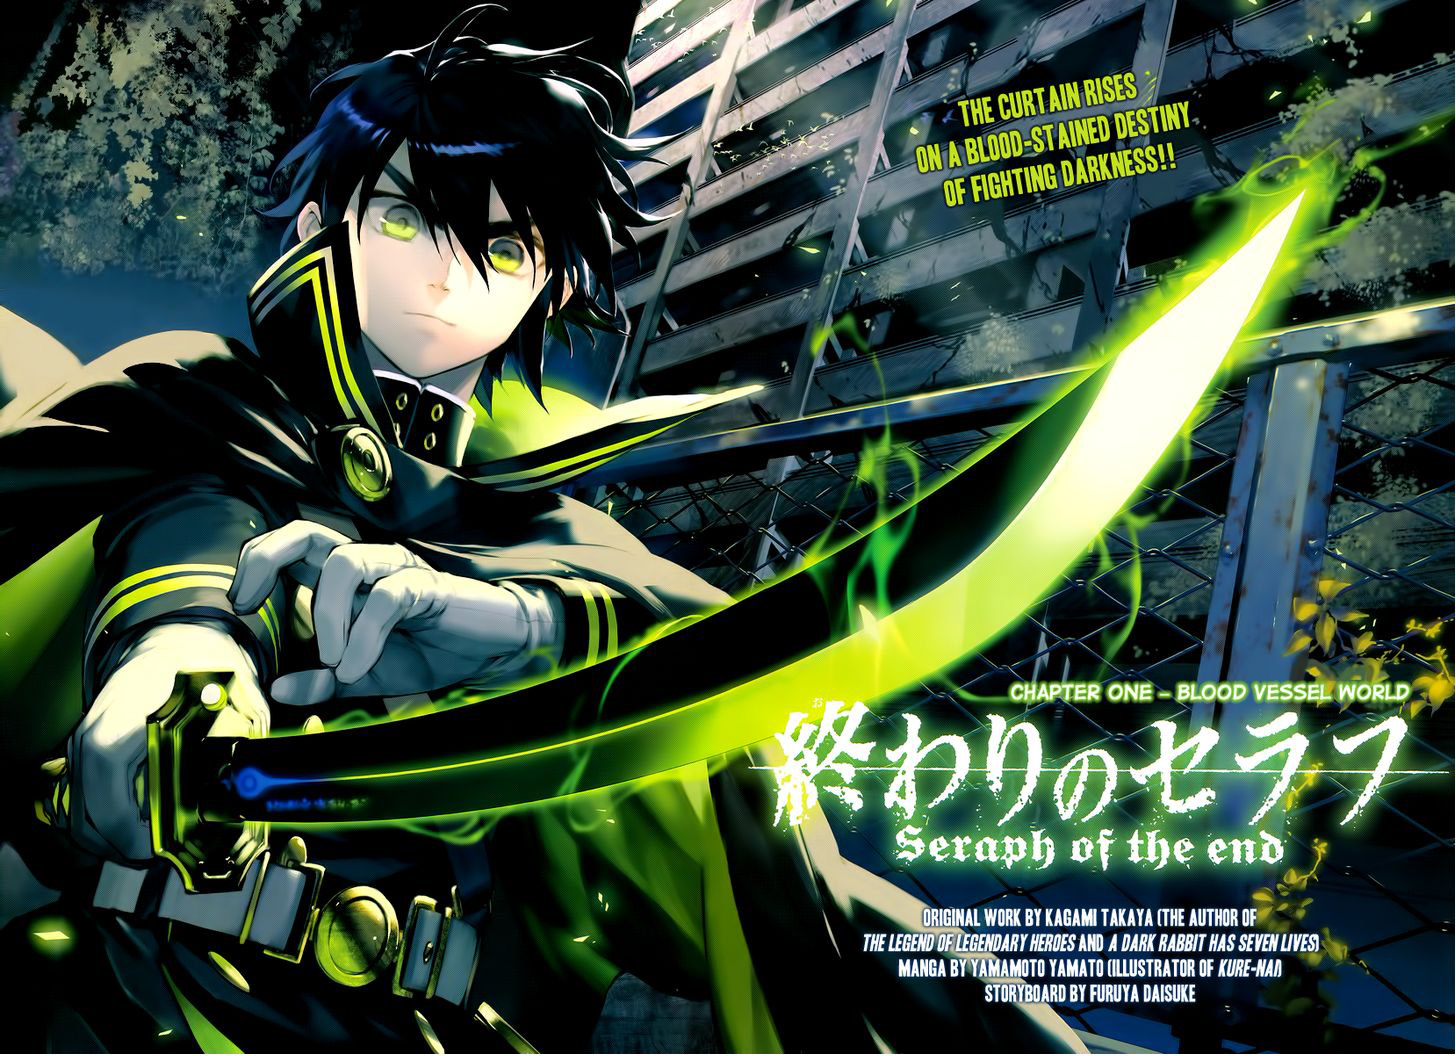 The Legend of the Legendary Heroes Novel by Takaya Kagami 1~11 JAPAN